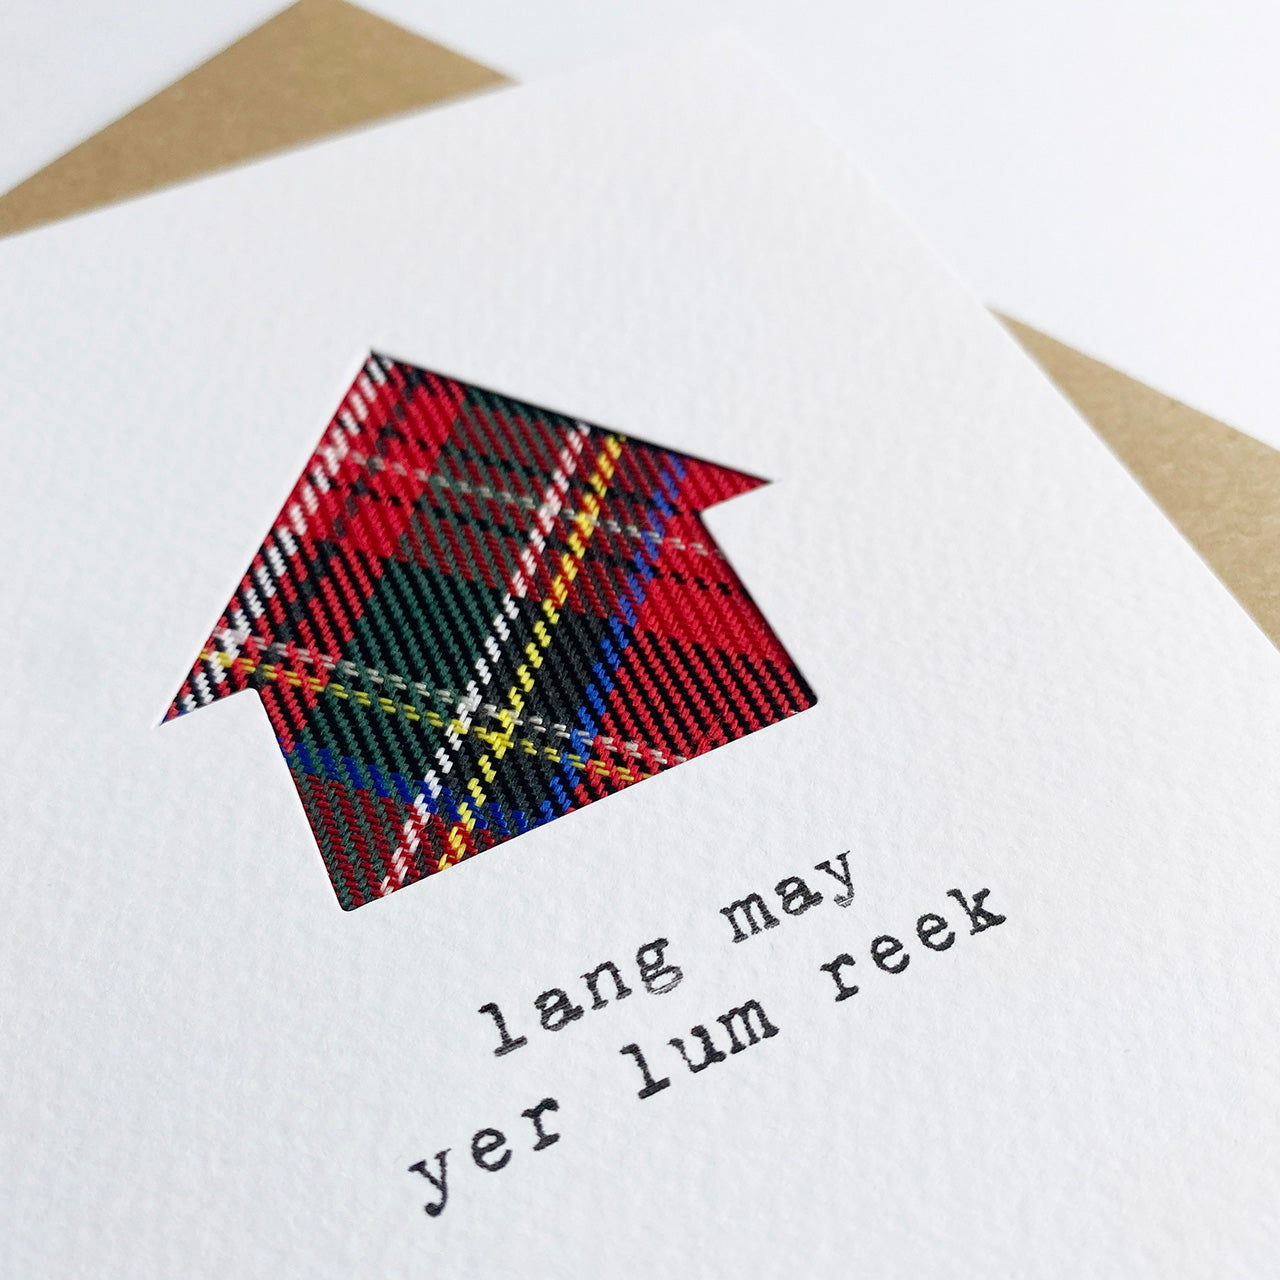 'Lang May Yer Lum Reek' Scottish New Home Card - HiyaPal